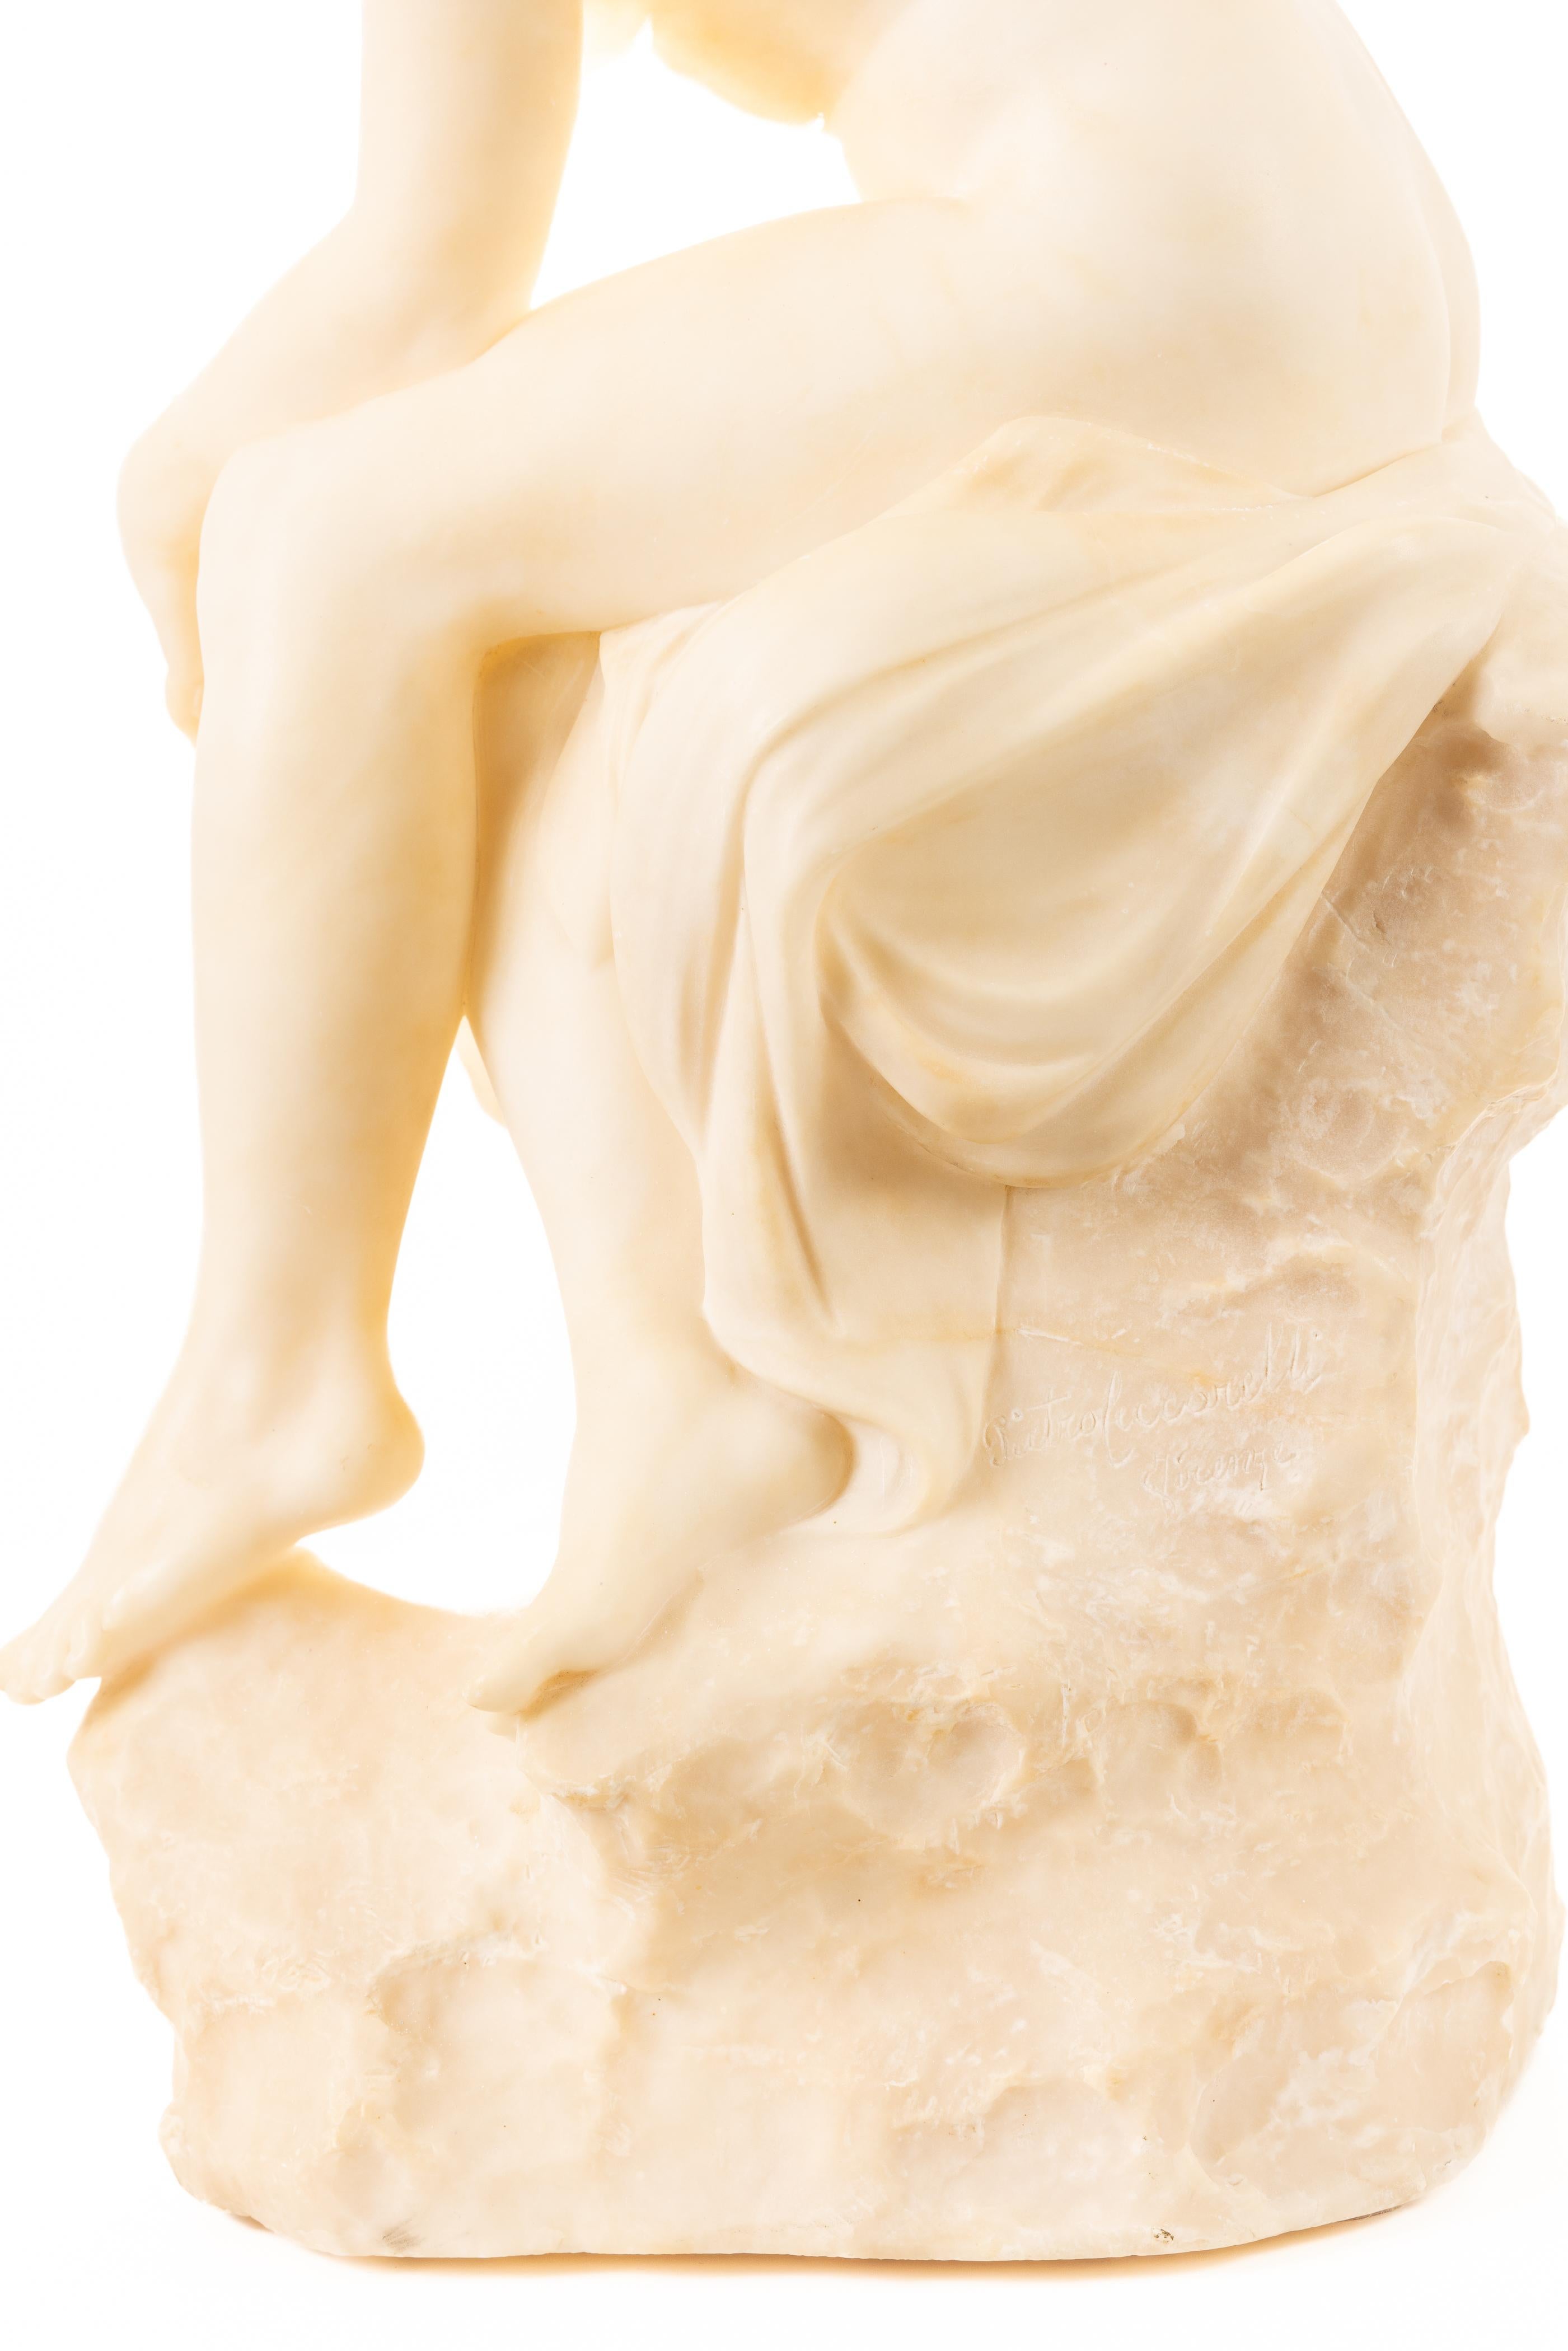 Jeune femme nue - Romantique Sculpture par Pietro Ceccarelli